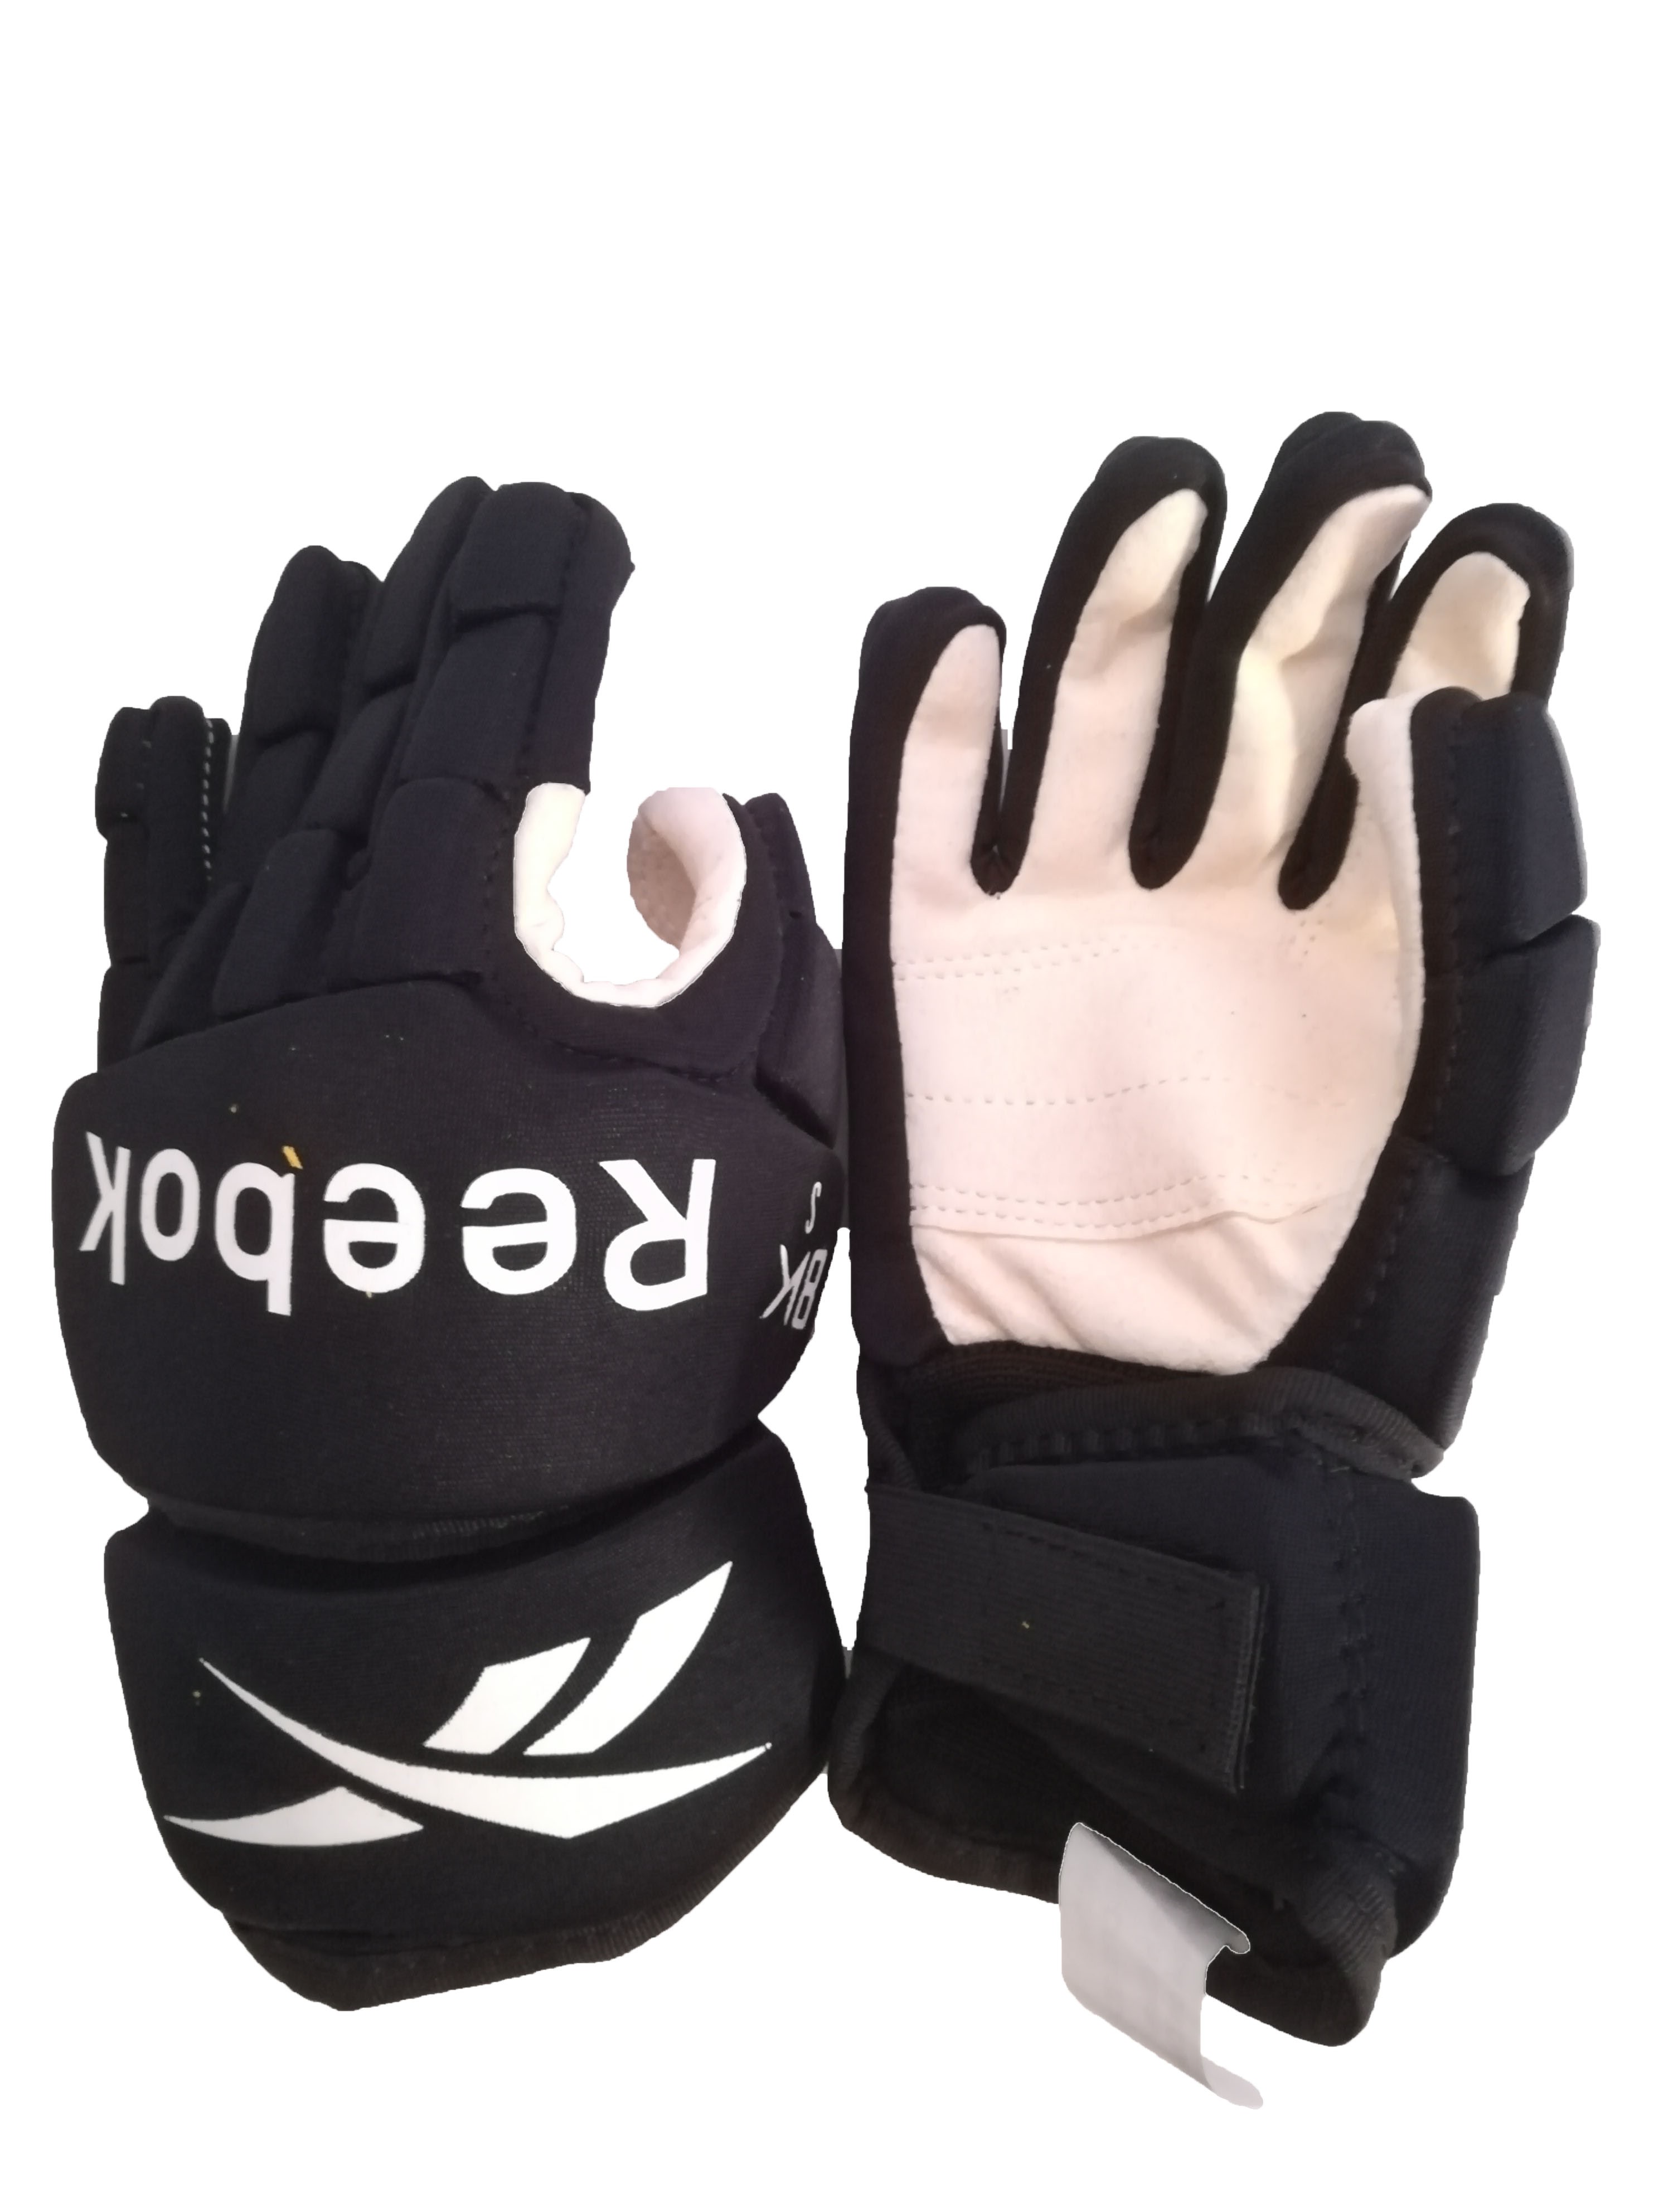 Reebok 8K Adult Bandy Gloves